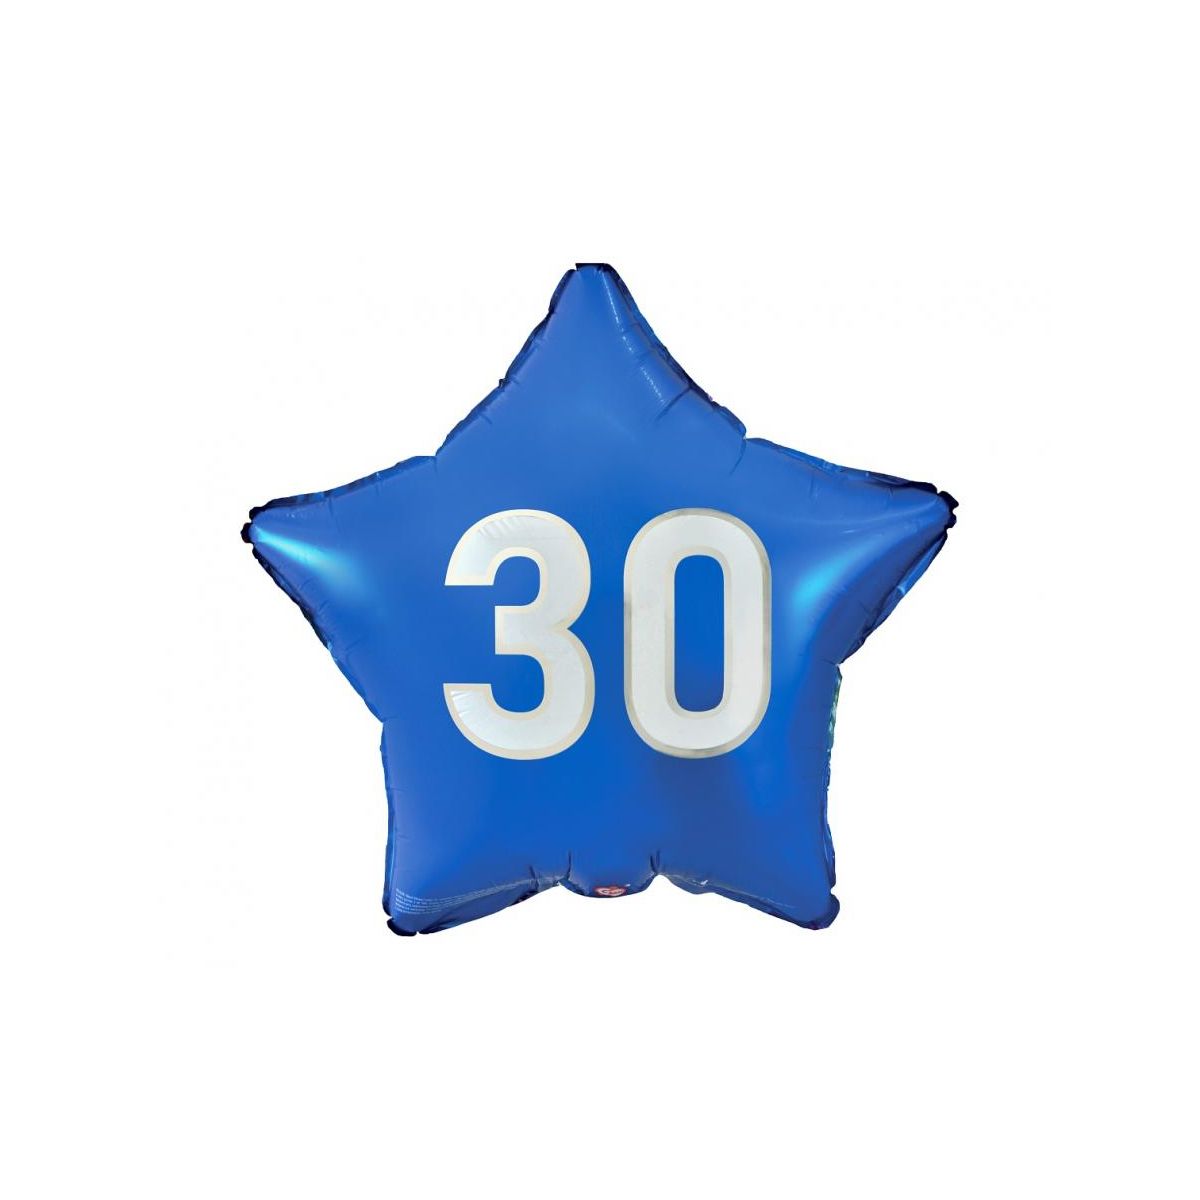 Balon foliowy Godan gwiazda niebieska, nadruk biały 30 19cal (FG-G30B)